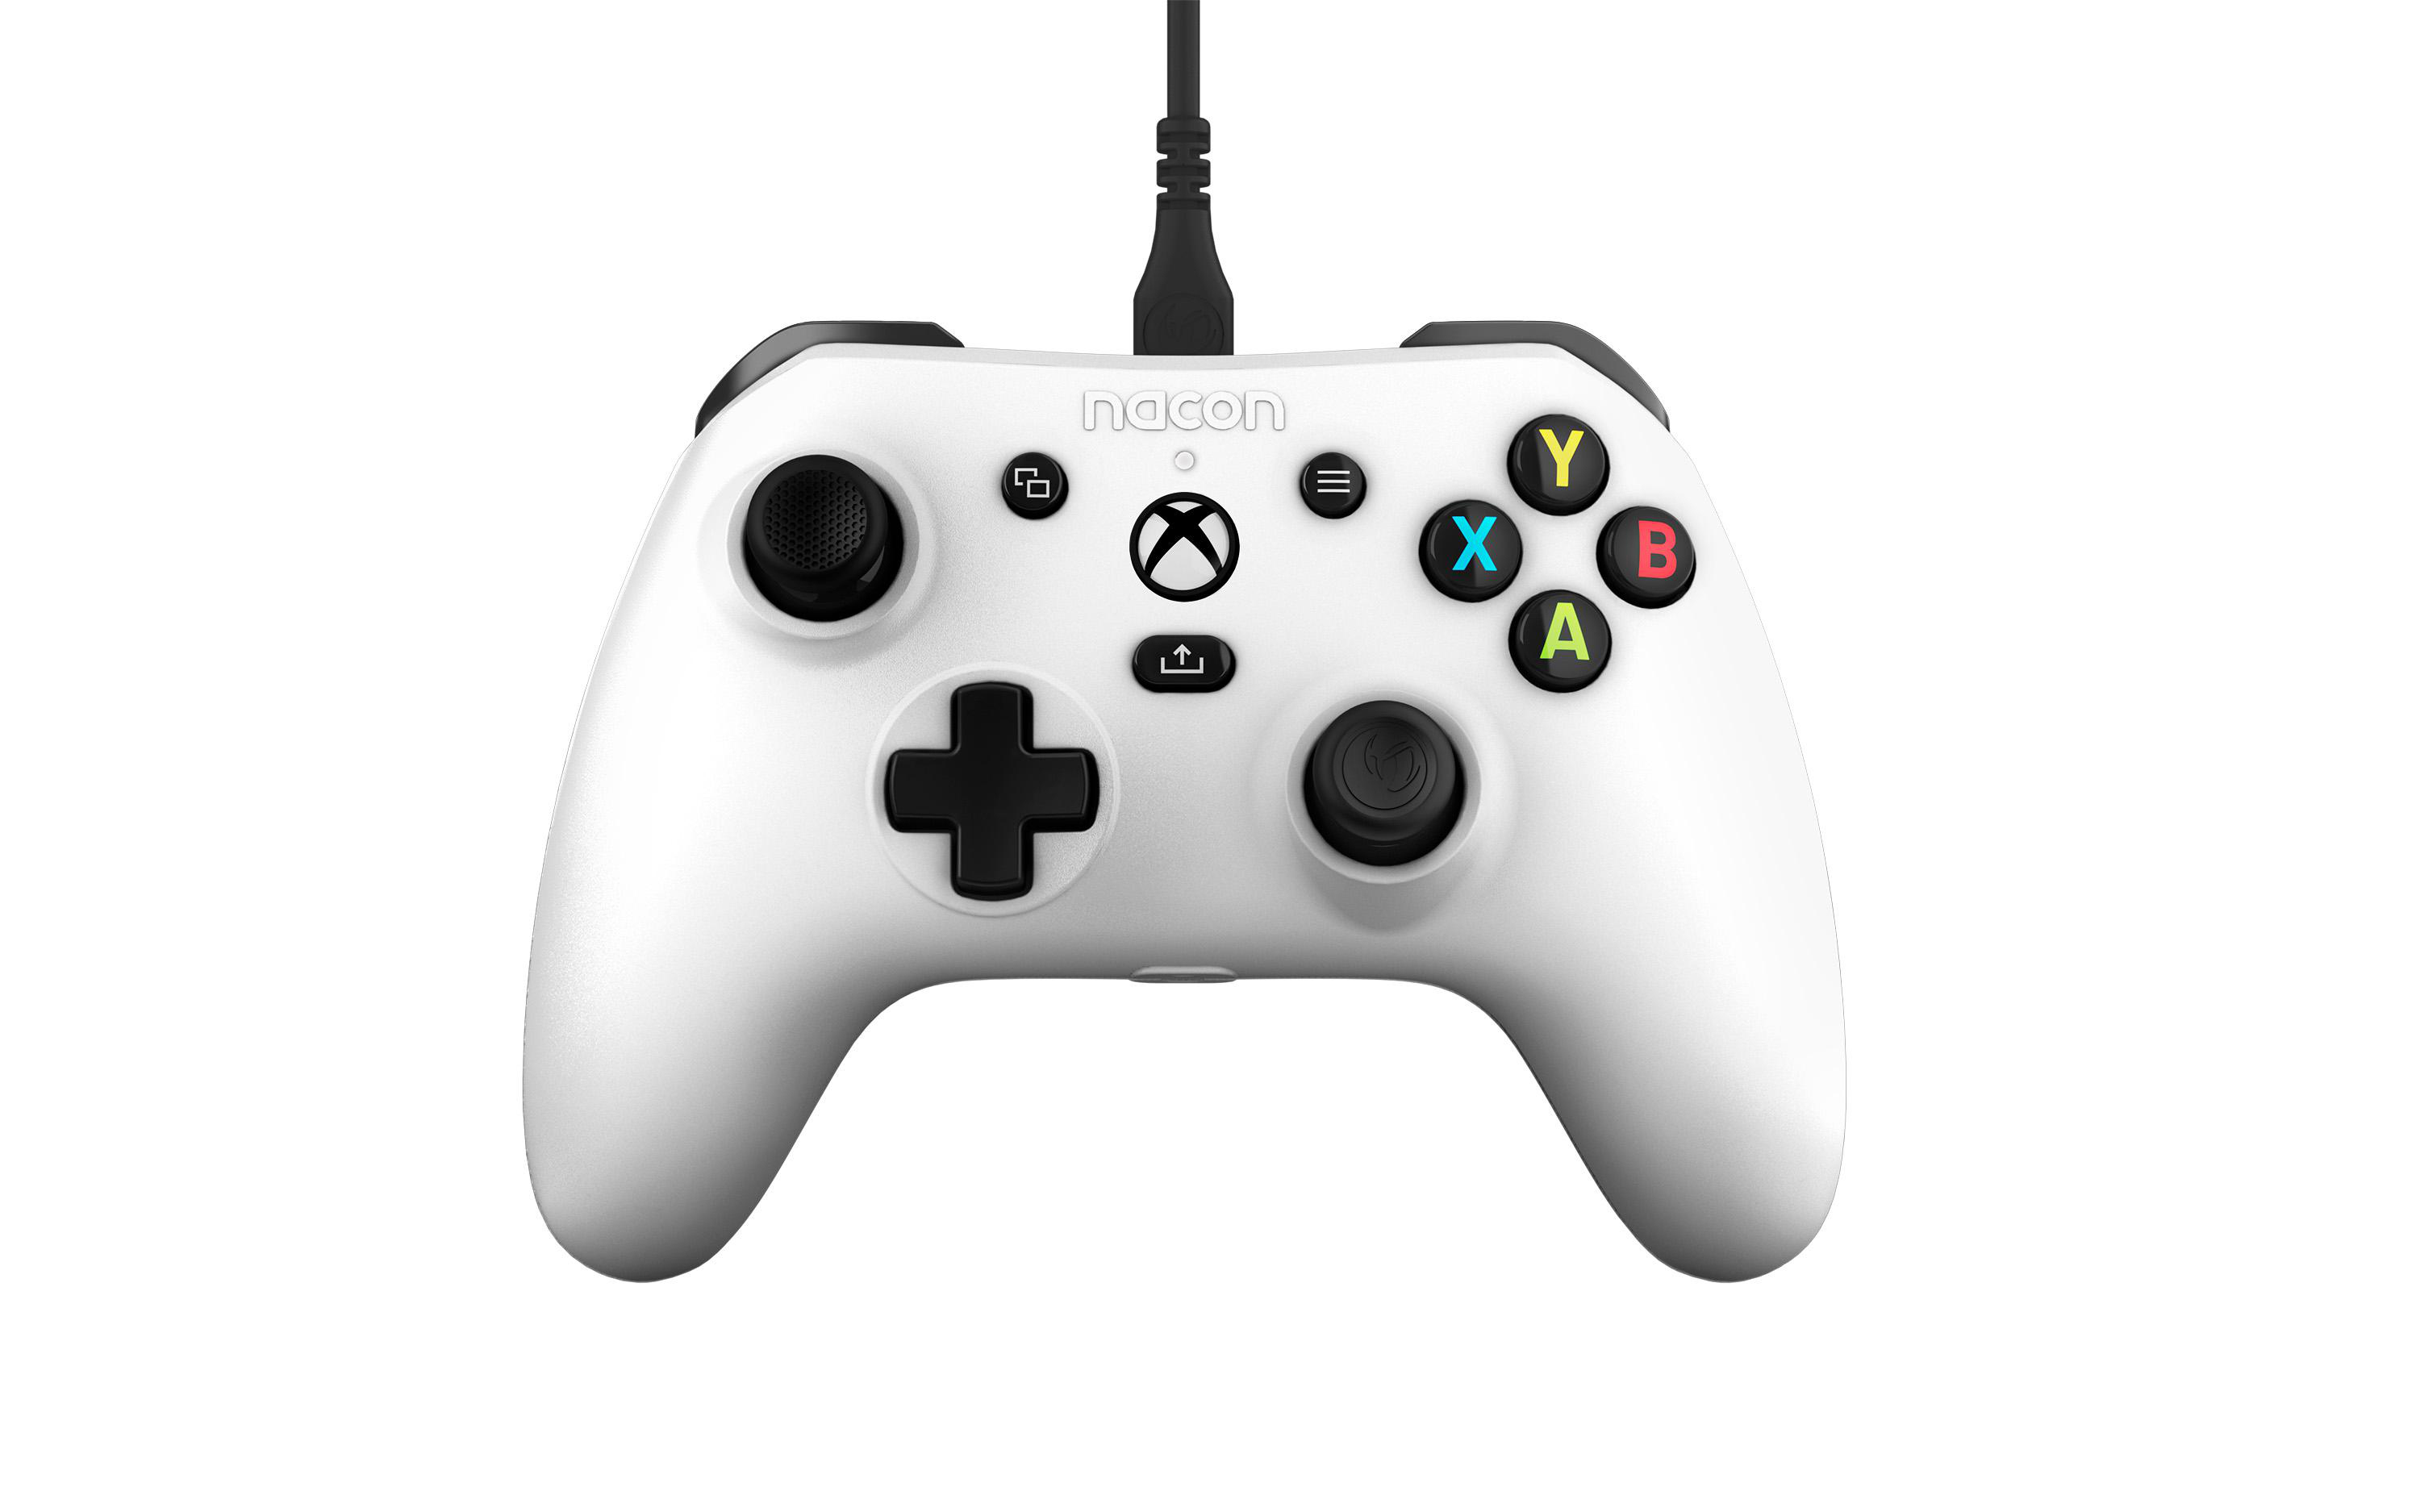 NACON EVOL-X Controller Xbox X, Series für Weiß WHITE Series Xbox Series Xbox S